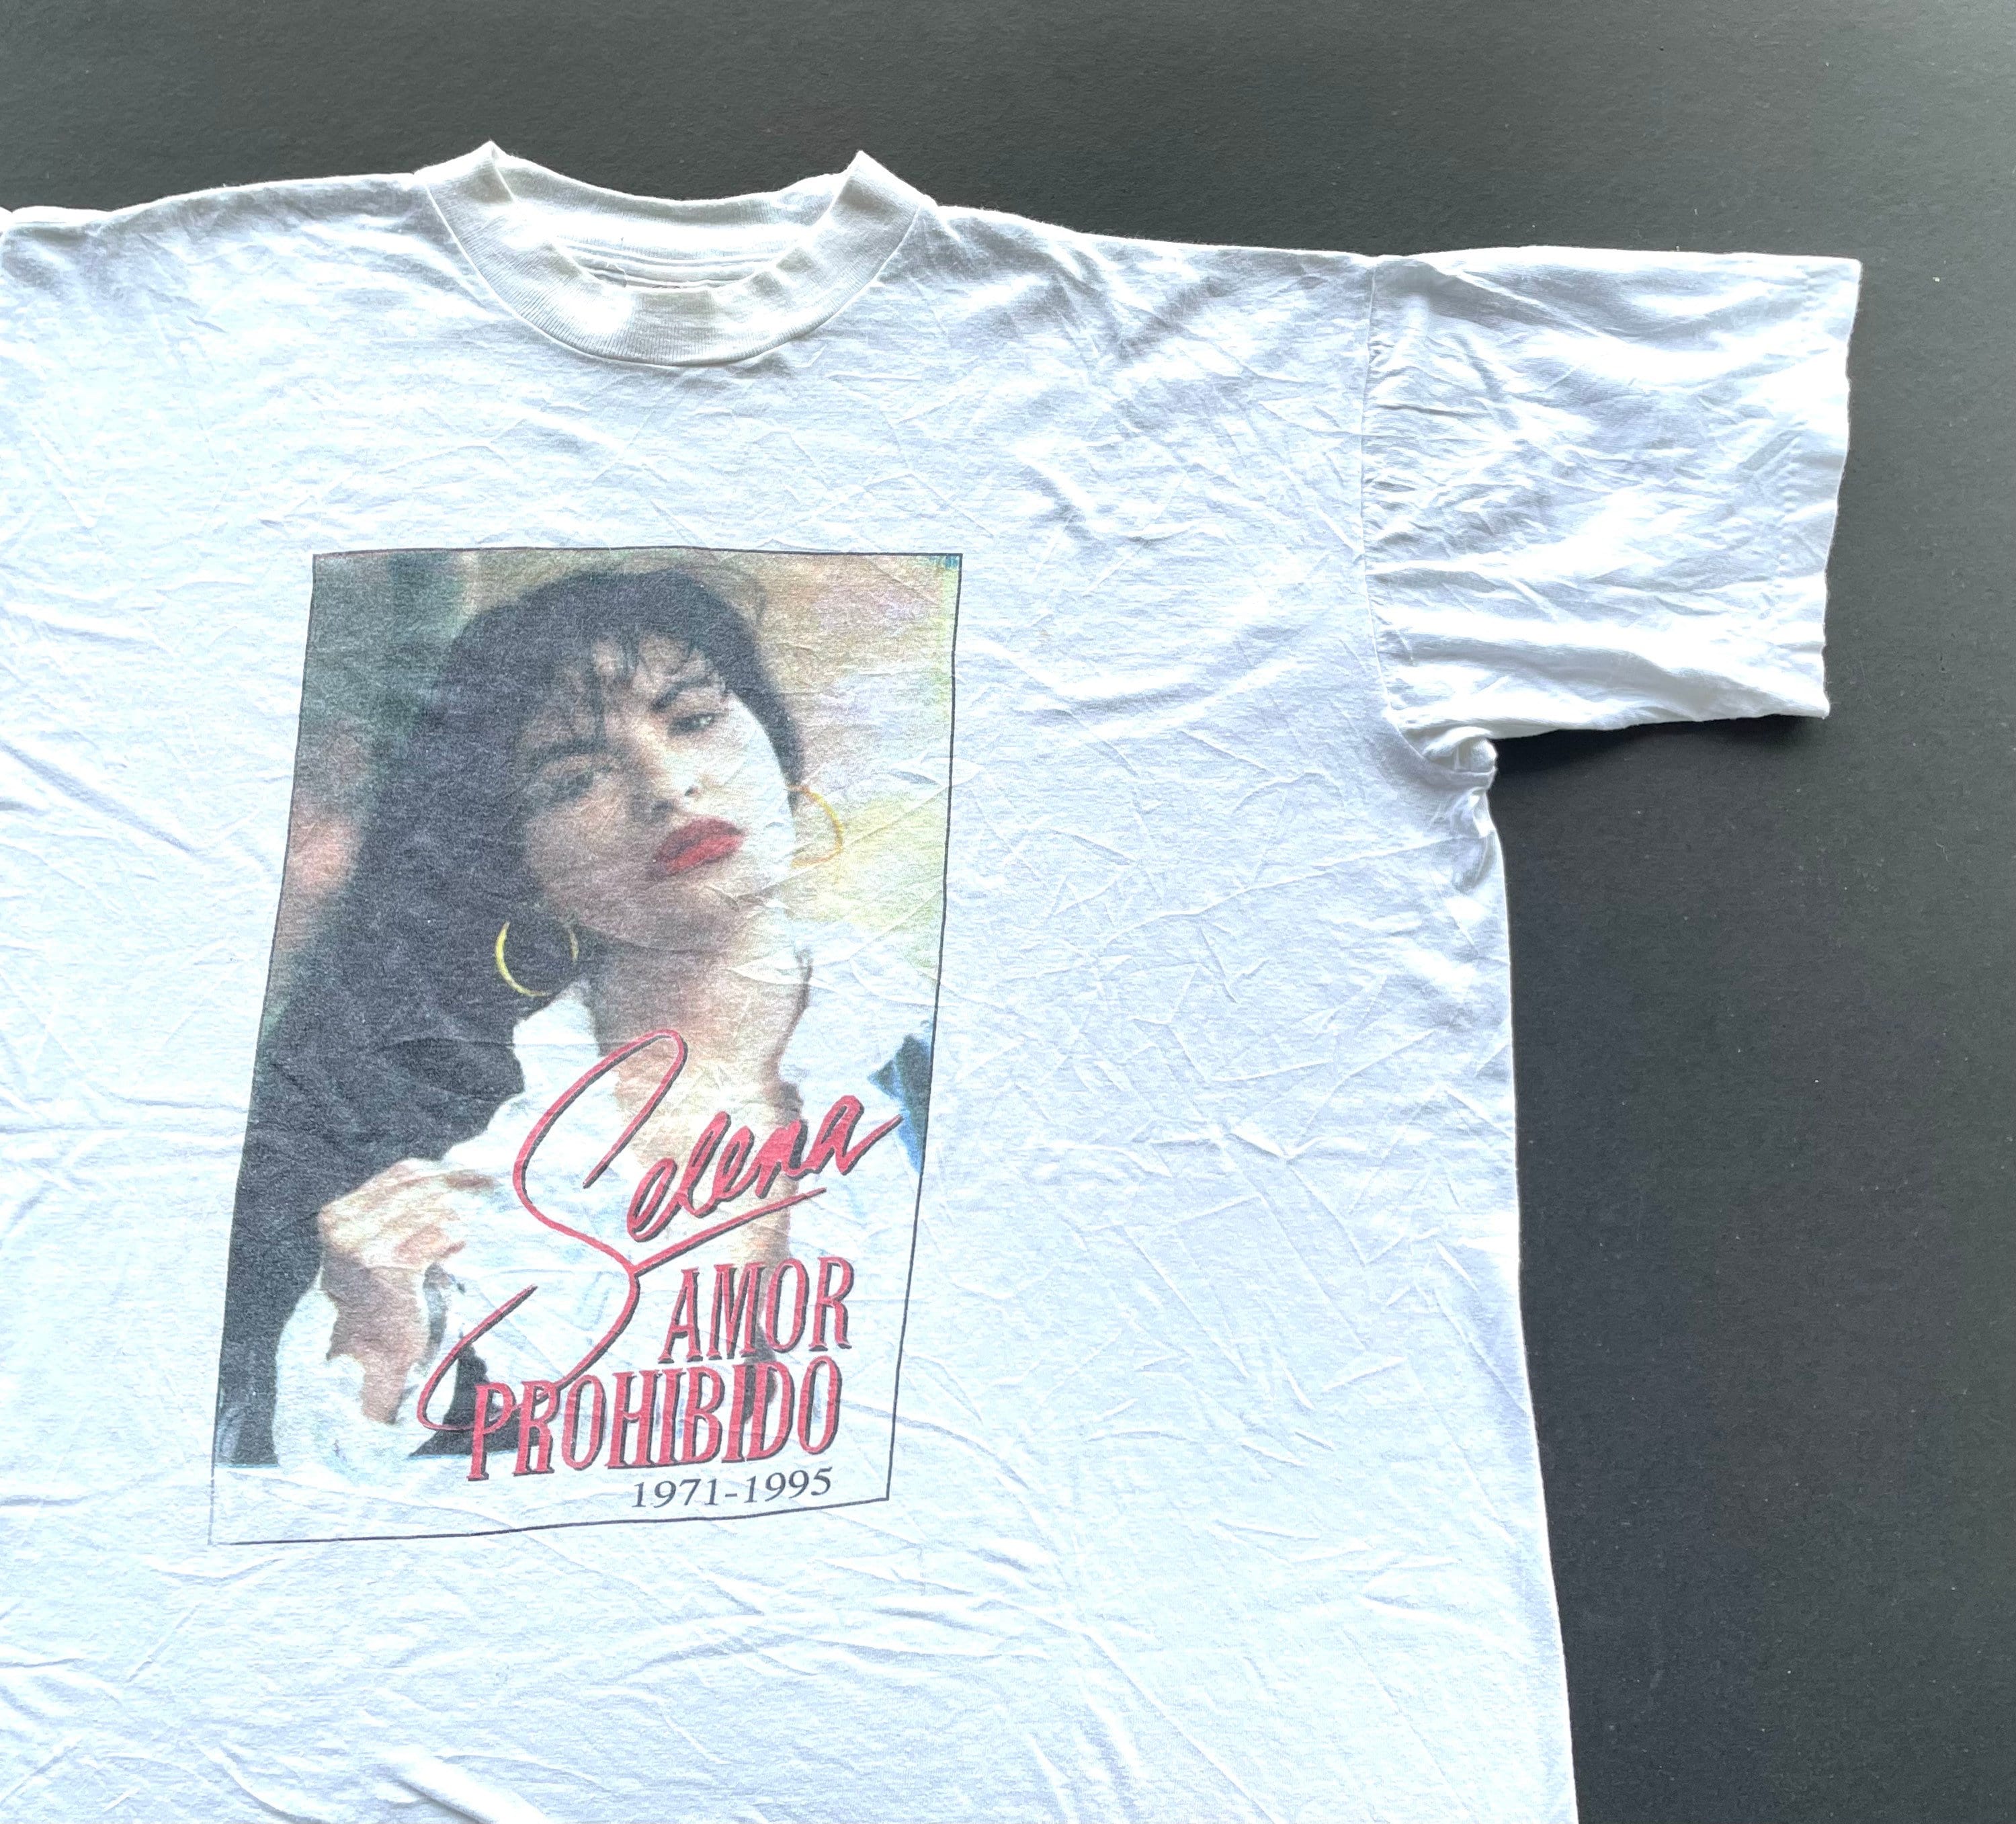 selena quintanilla shirt vintage 90s style shirt unisex homage t shirt 0yu17